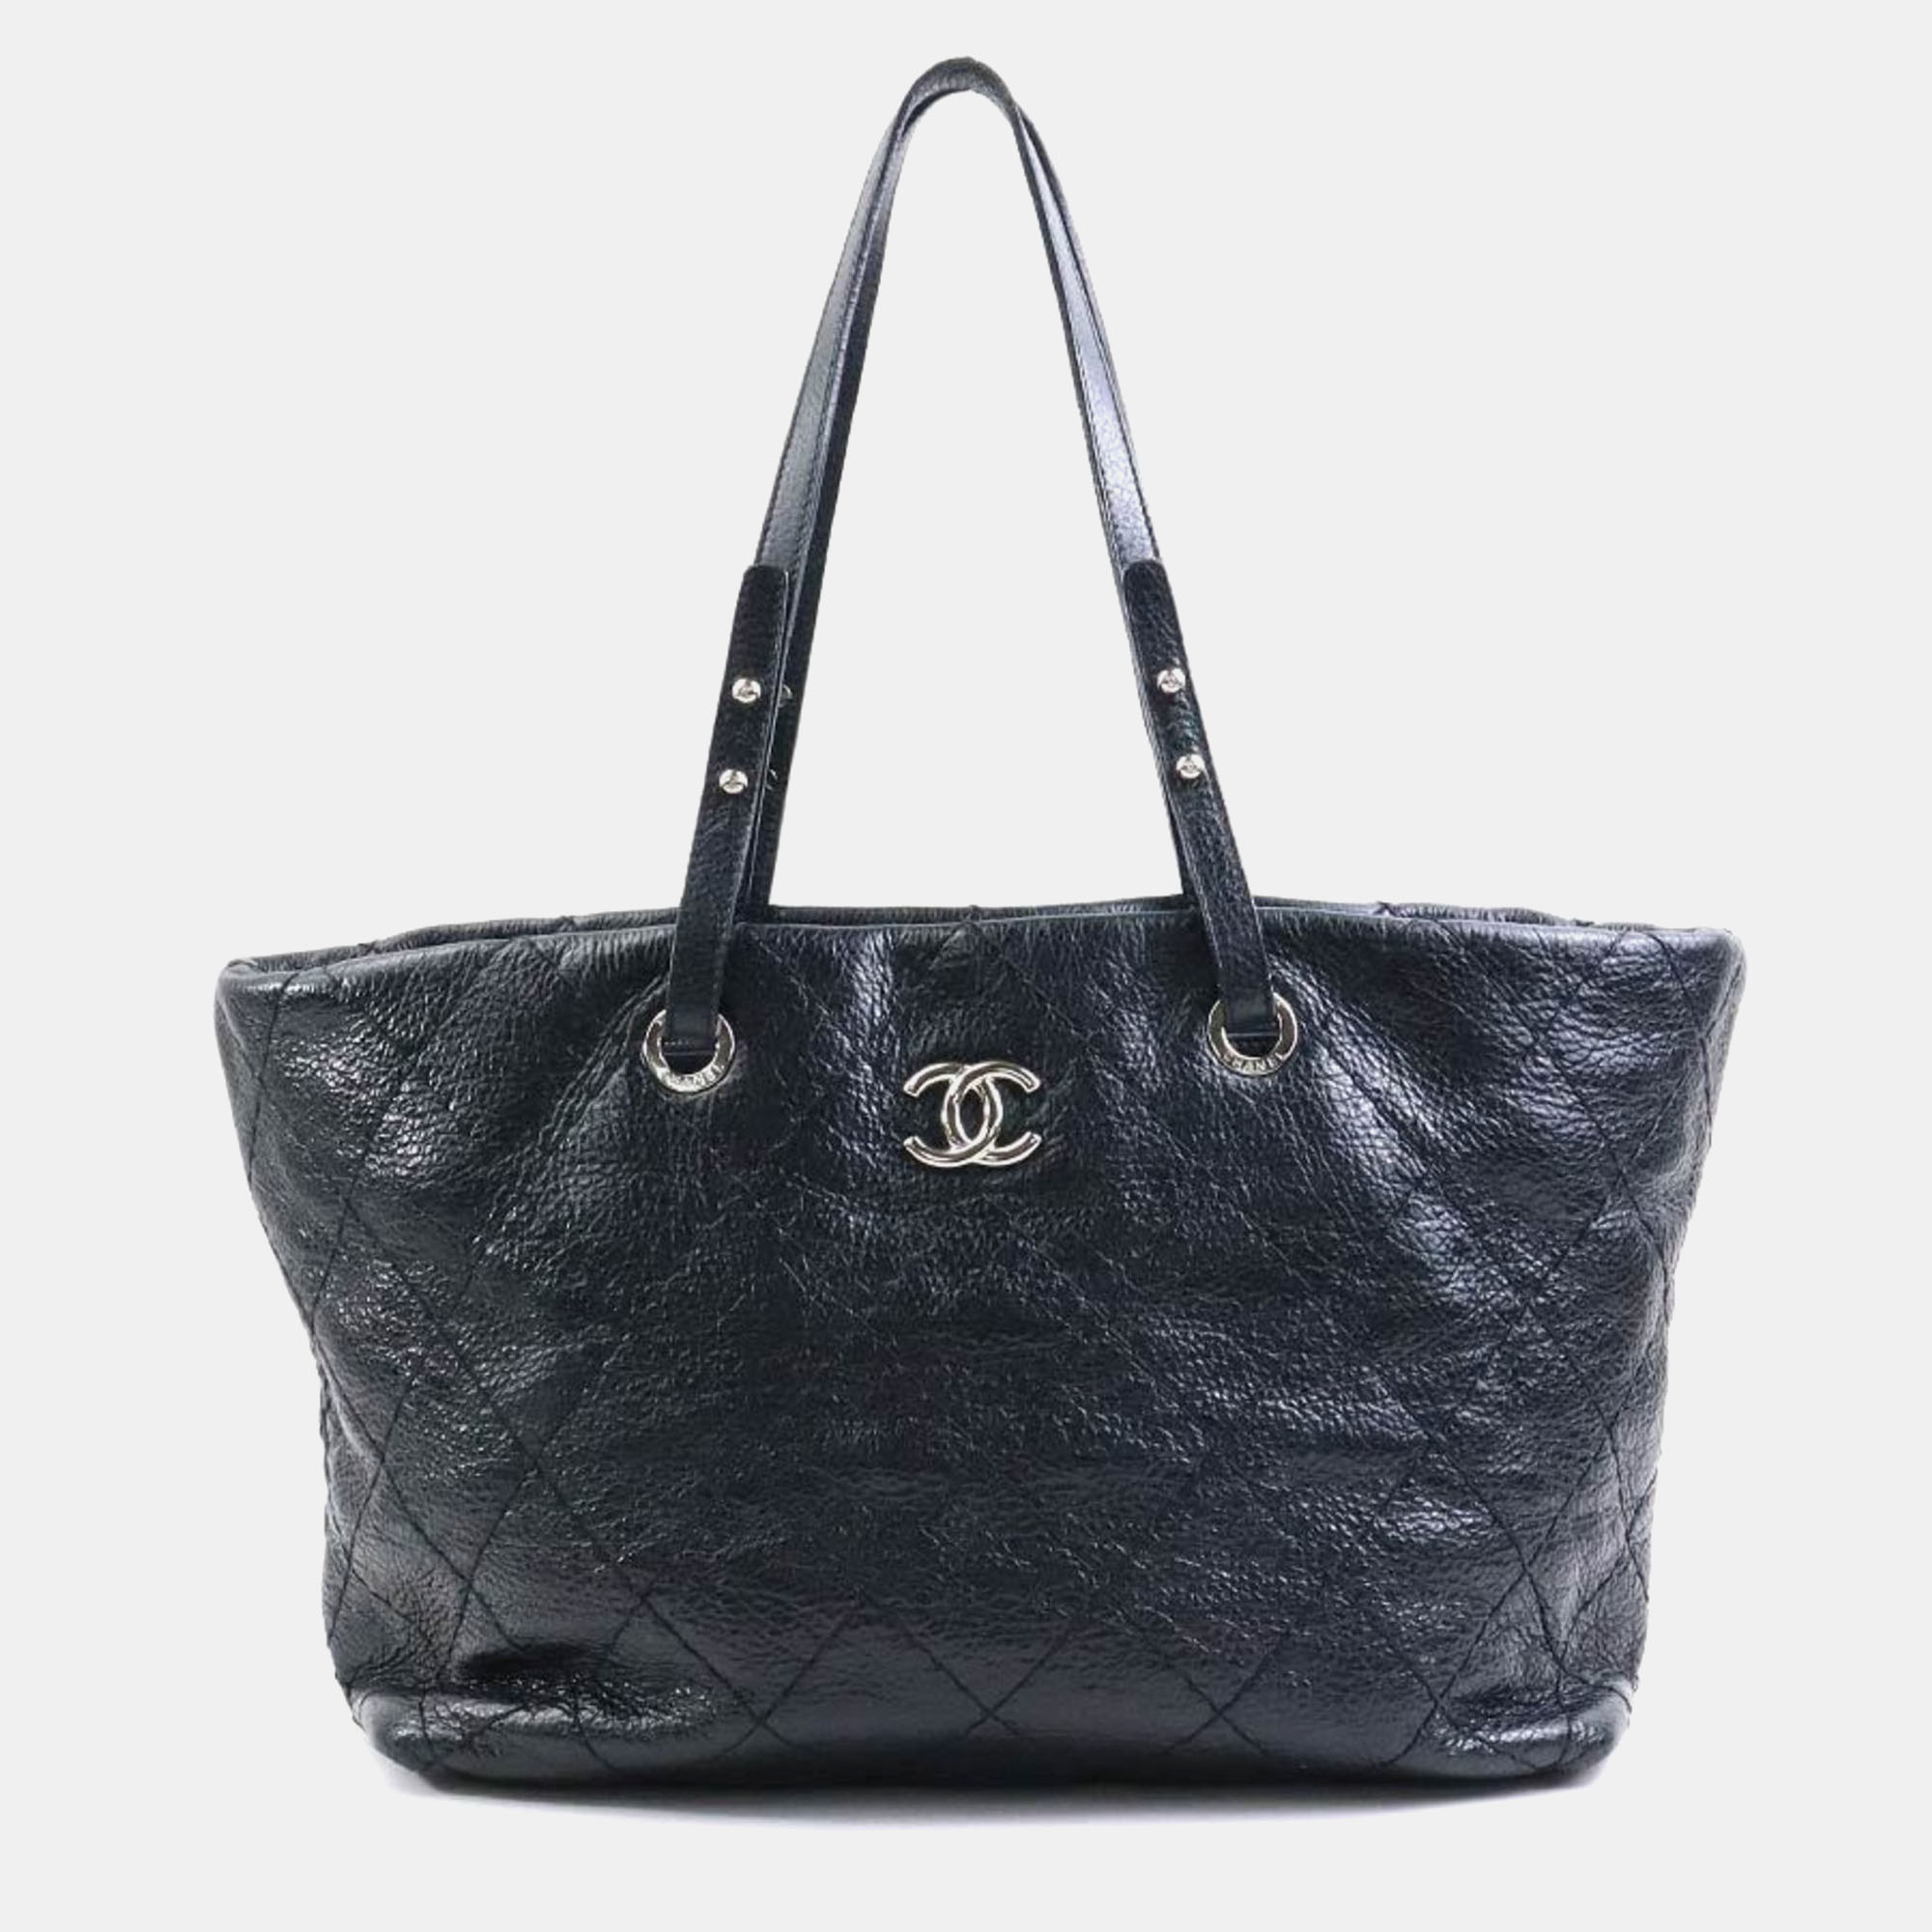 Chanel black glazed calfskin large on the road tote bag